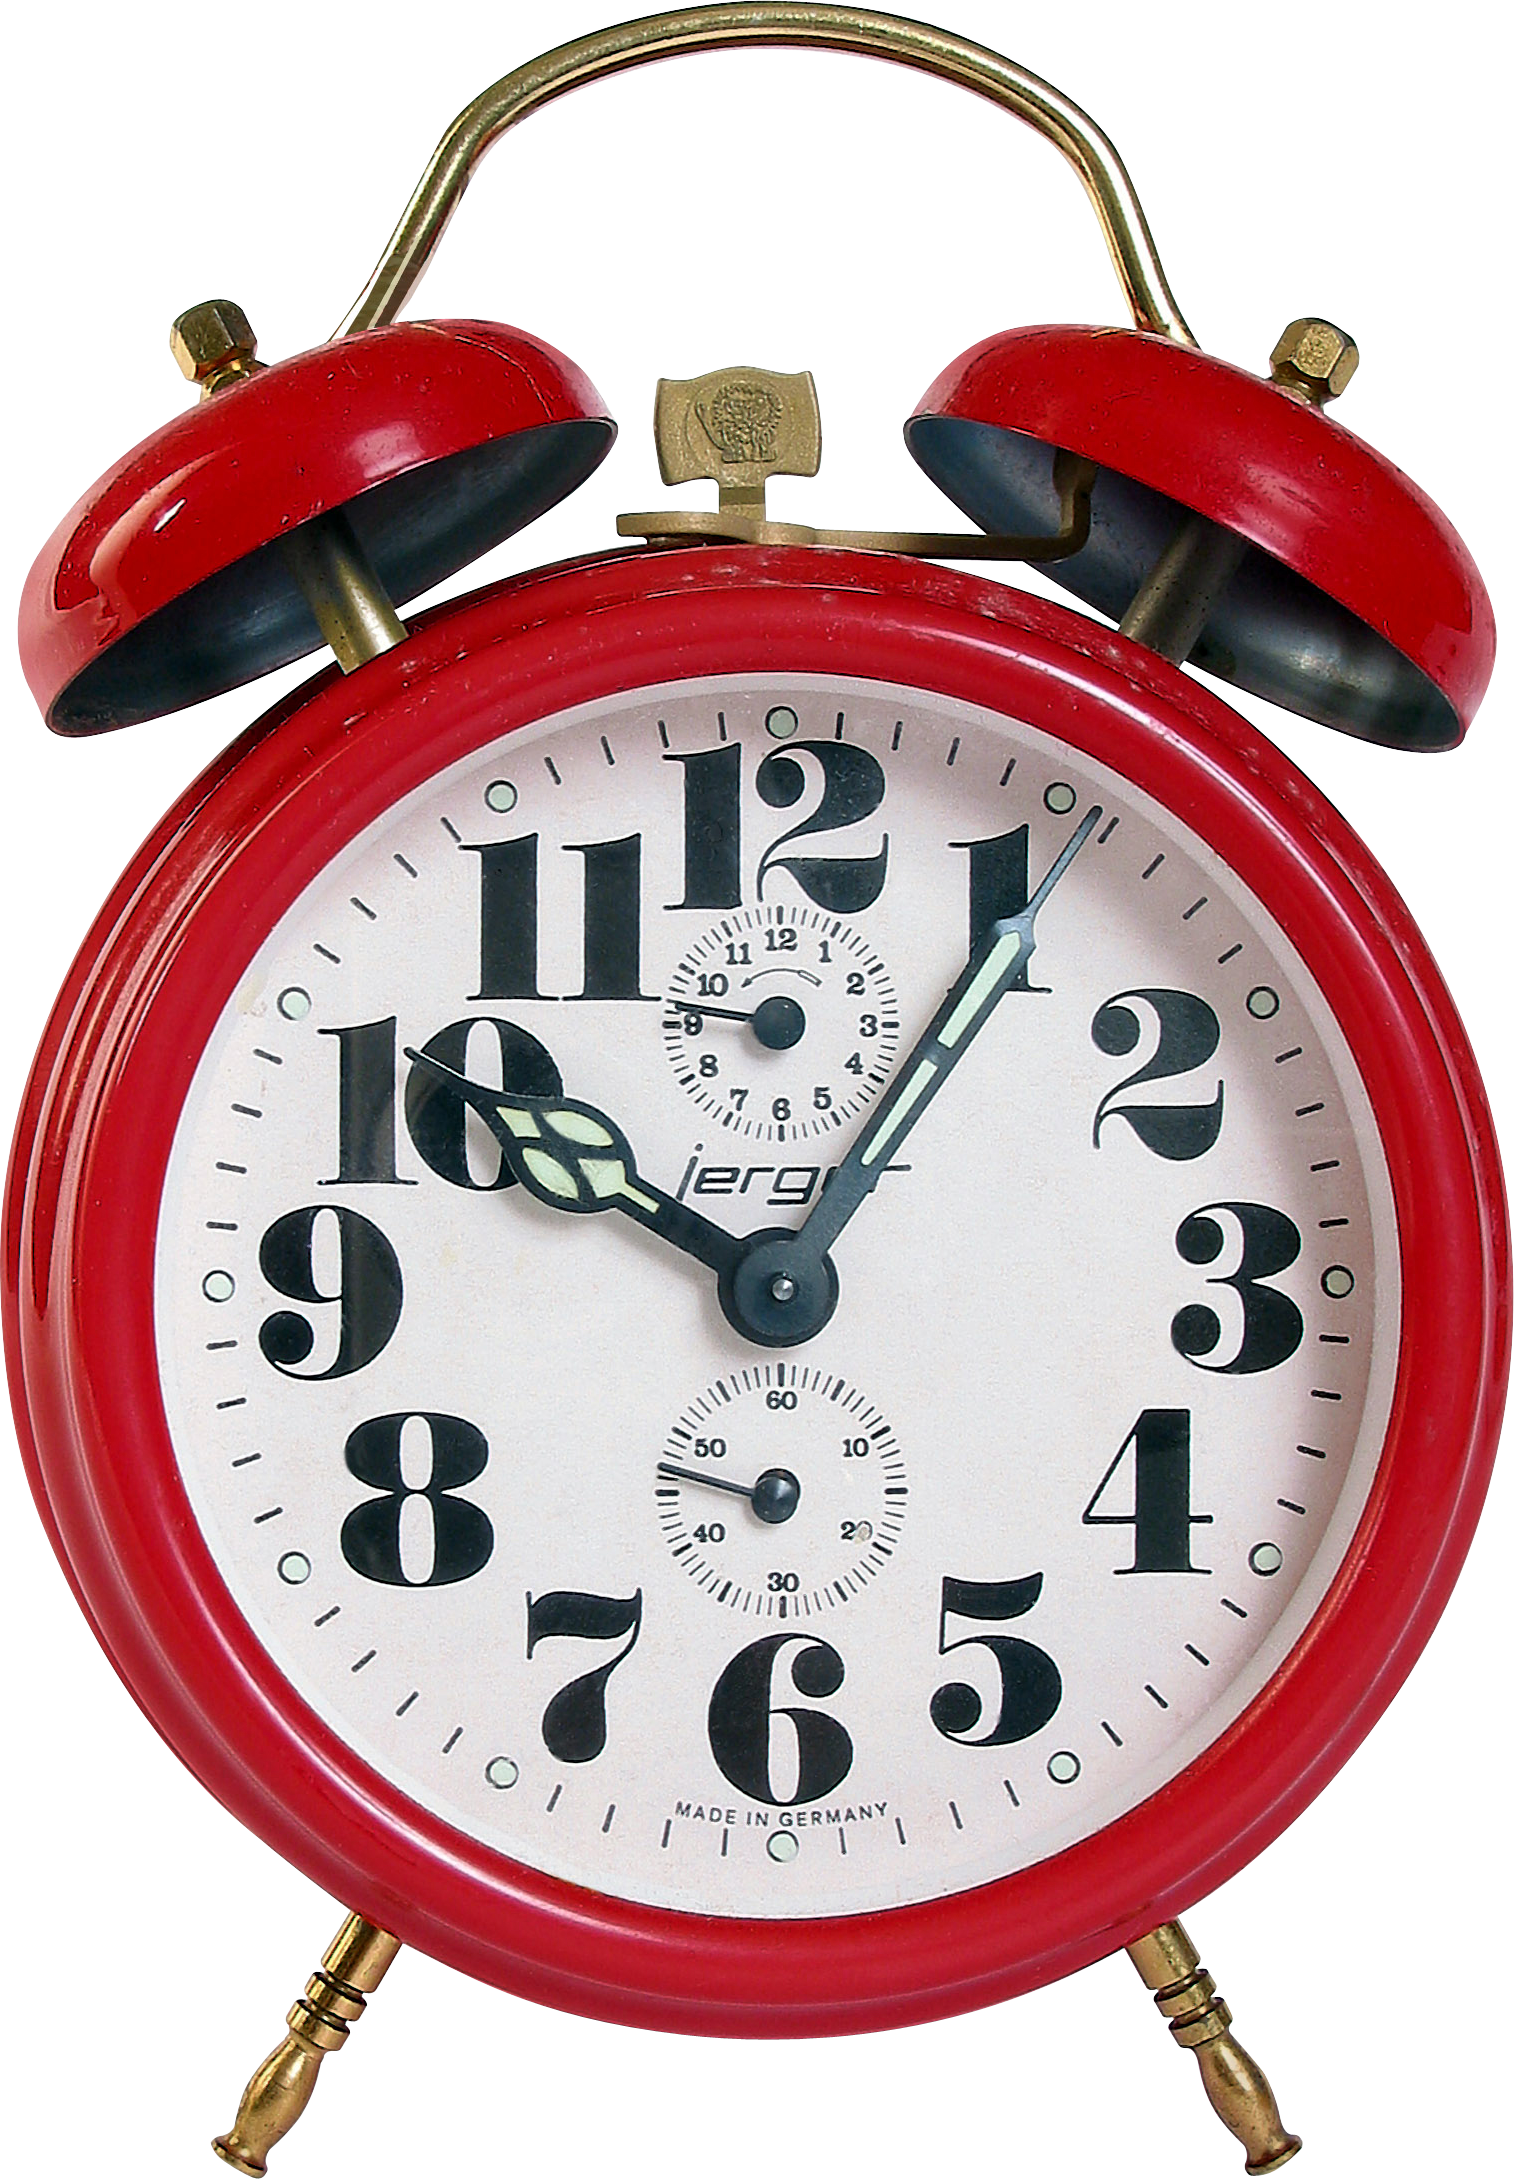 Red Alarm Clock PNG Image - PurePNG | Free transparent CC0 PNG Image ...